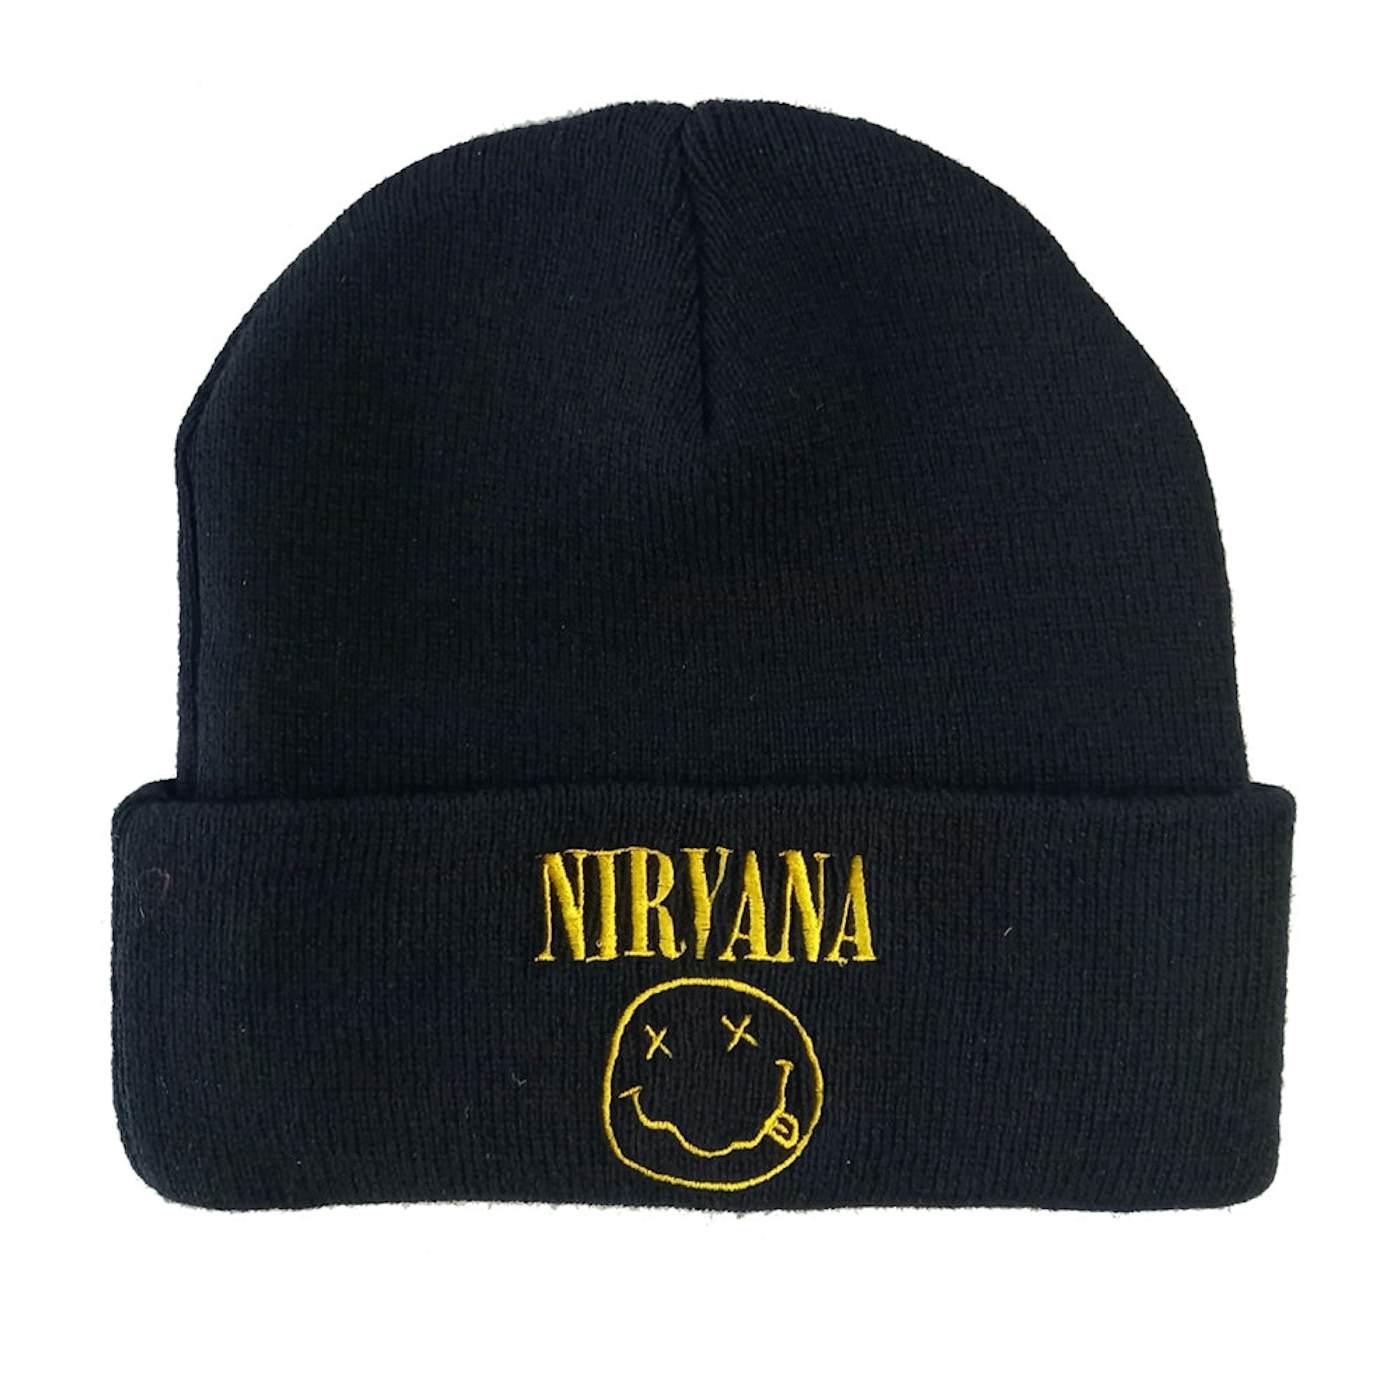 Nirvana Beanie - Smiley Logo